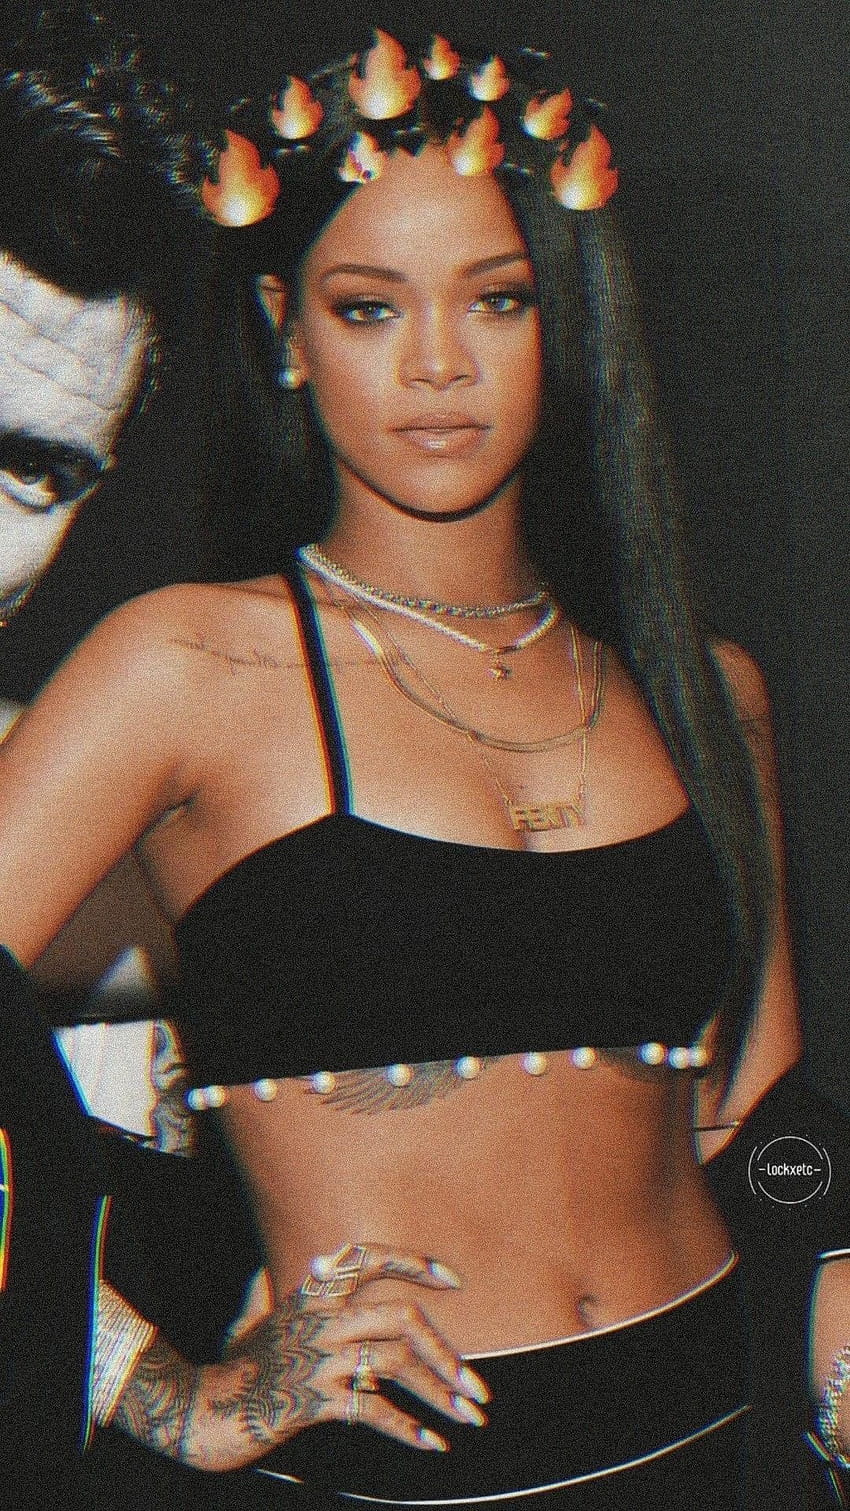 A portrait of Rihanna wearing a black crop top and a fire crown. - Rihanna